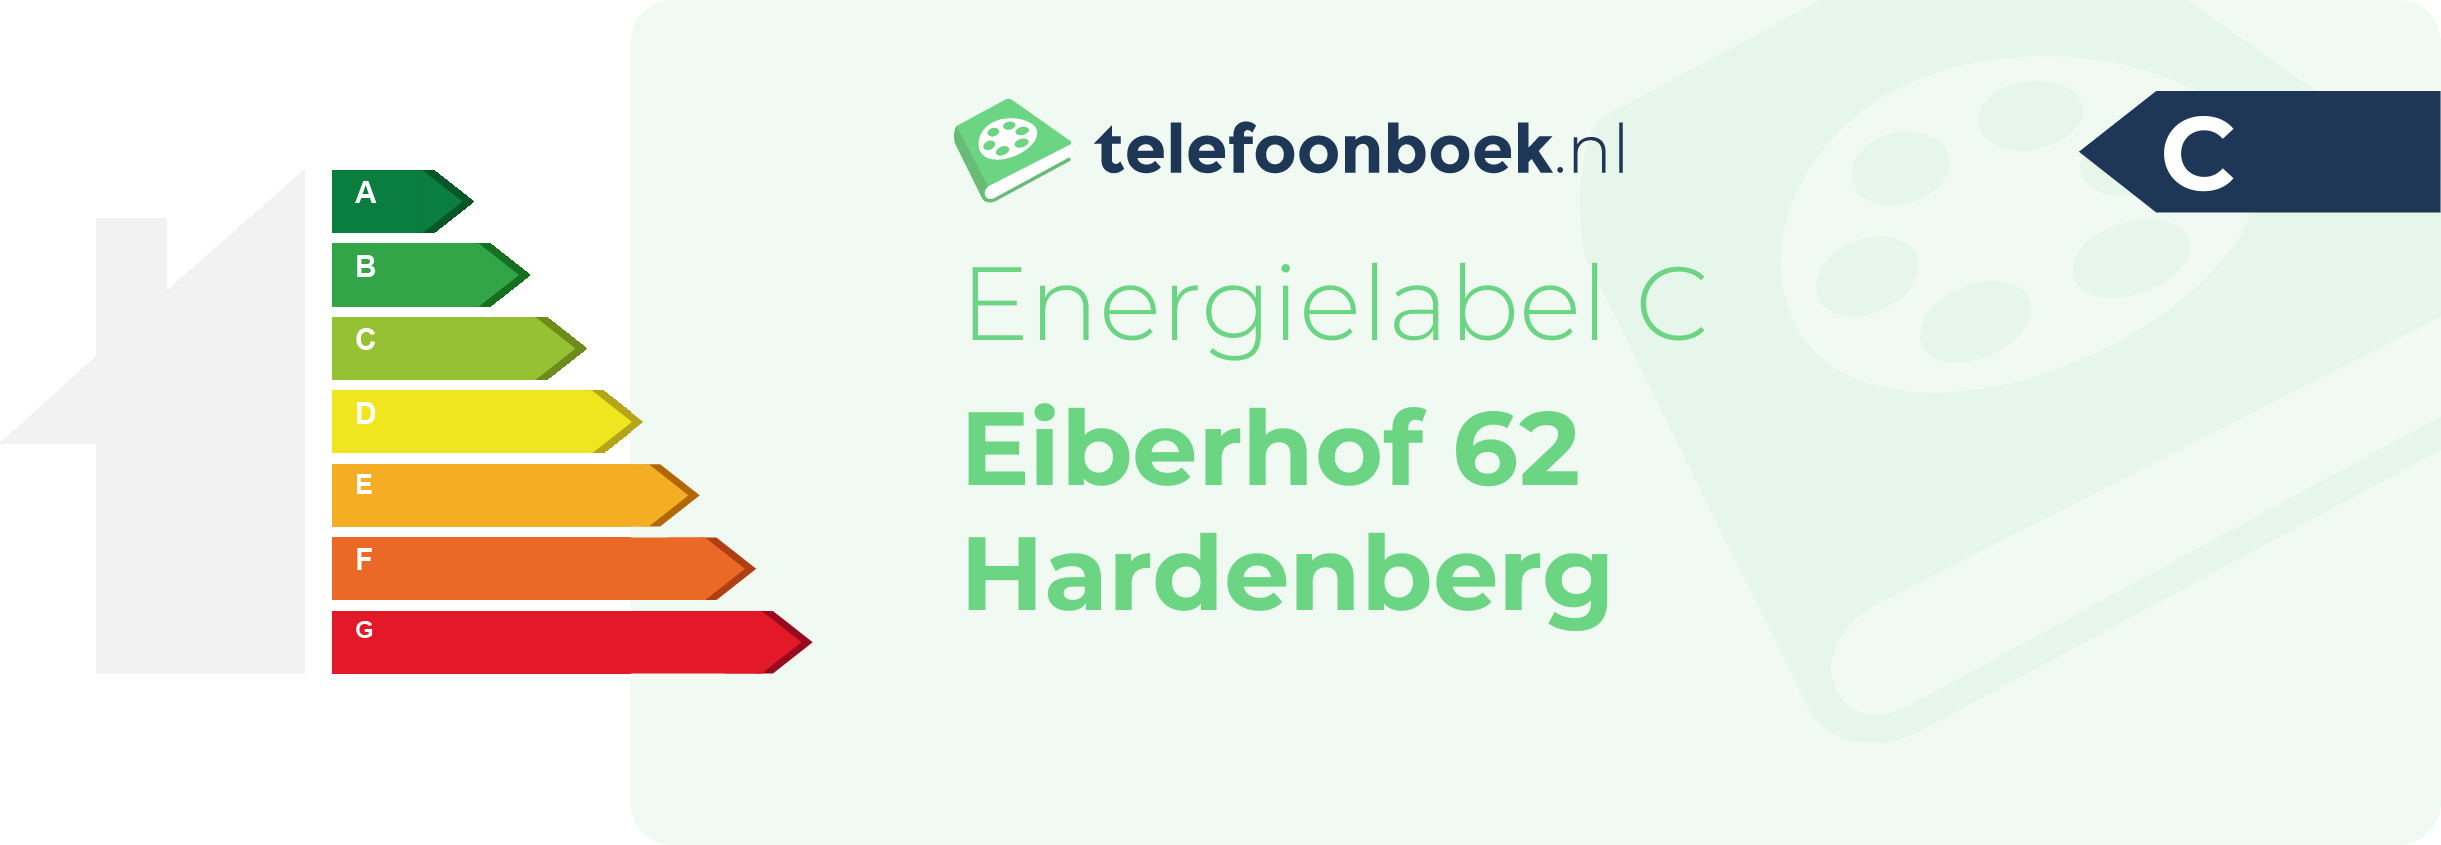 Energielabel Eiberhof 62 Hardenberg